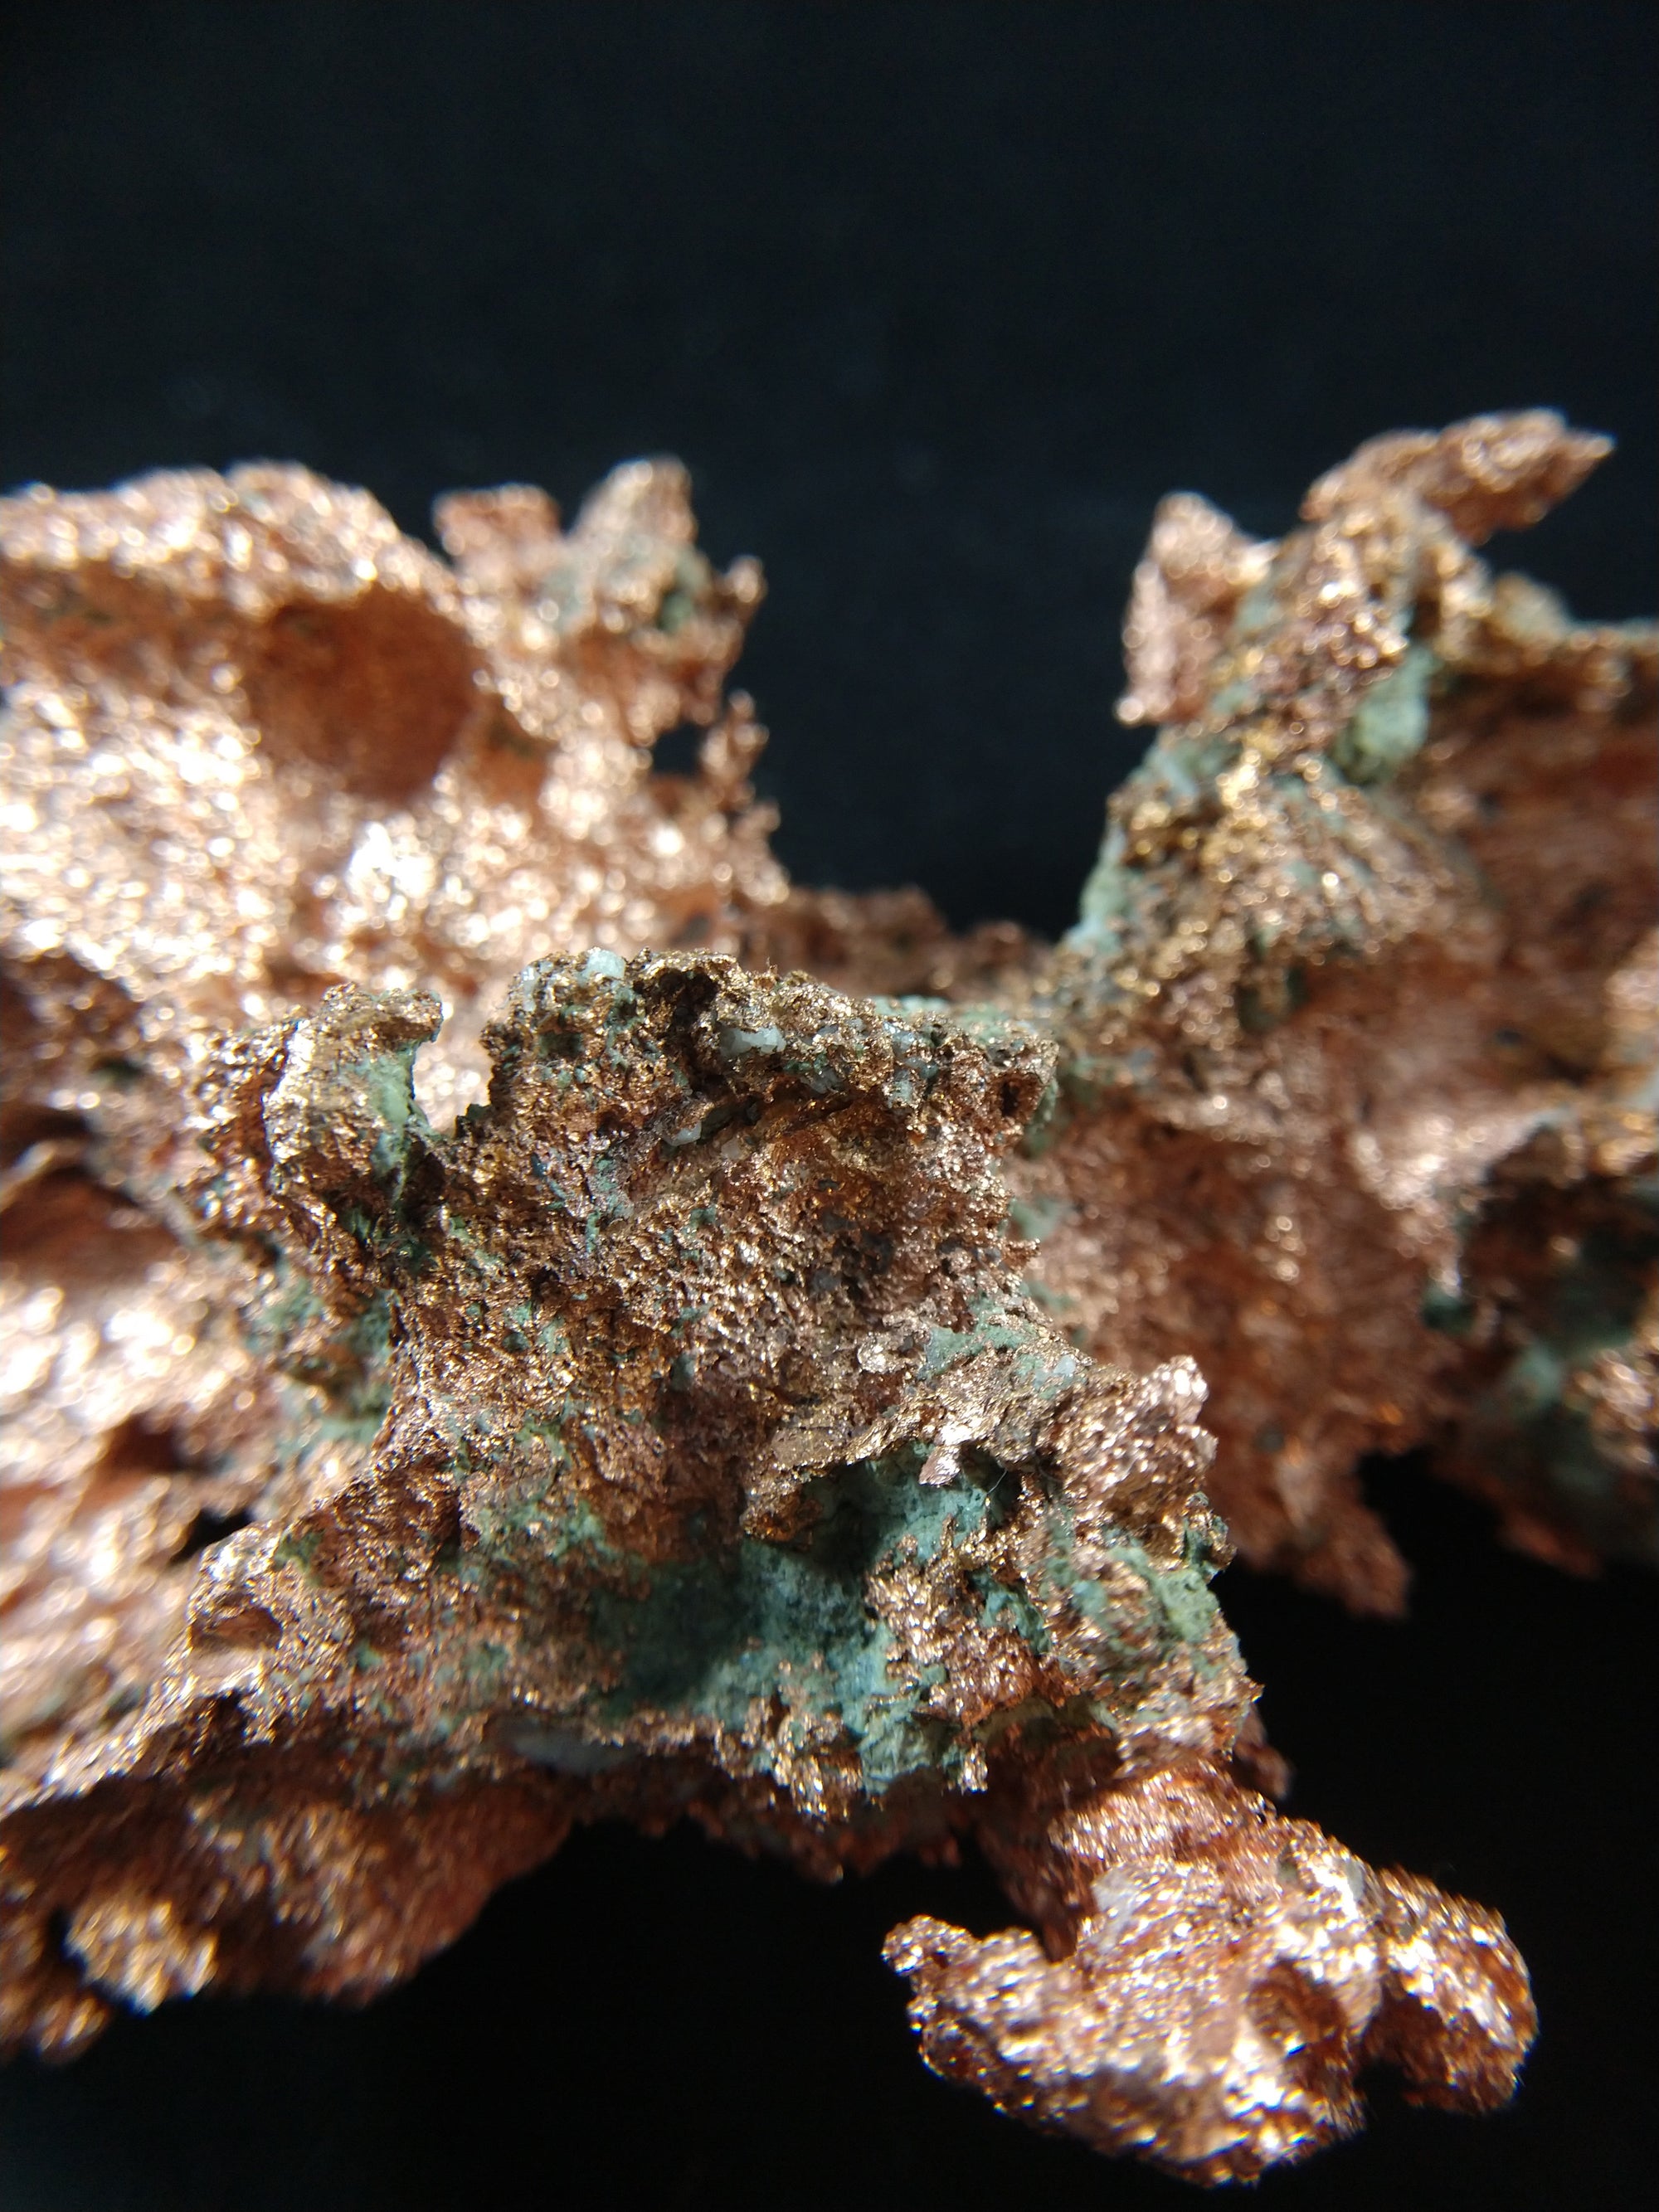 Native Copper from Michigan